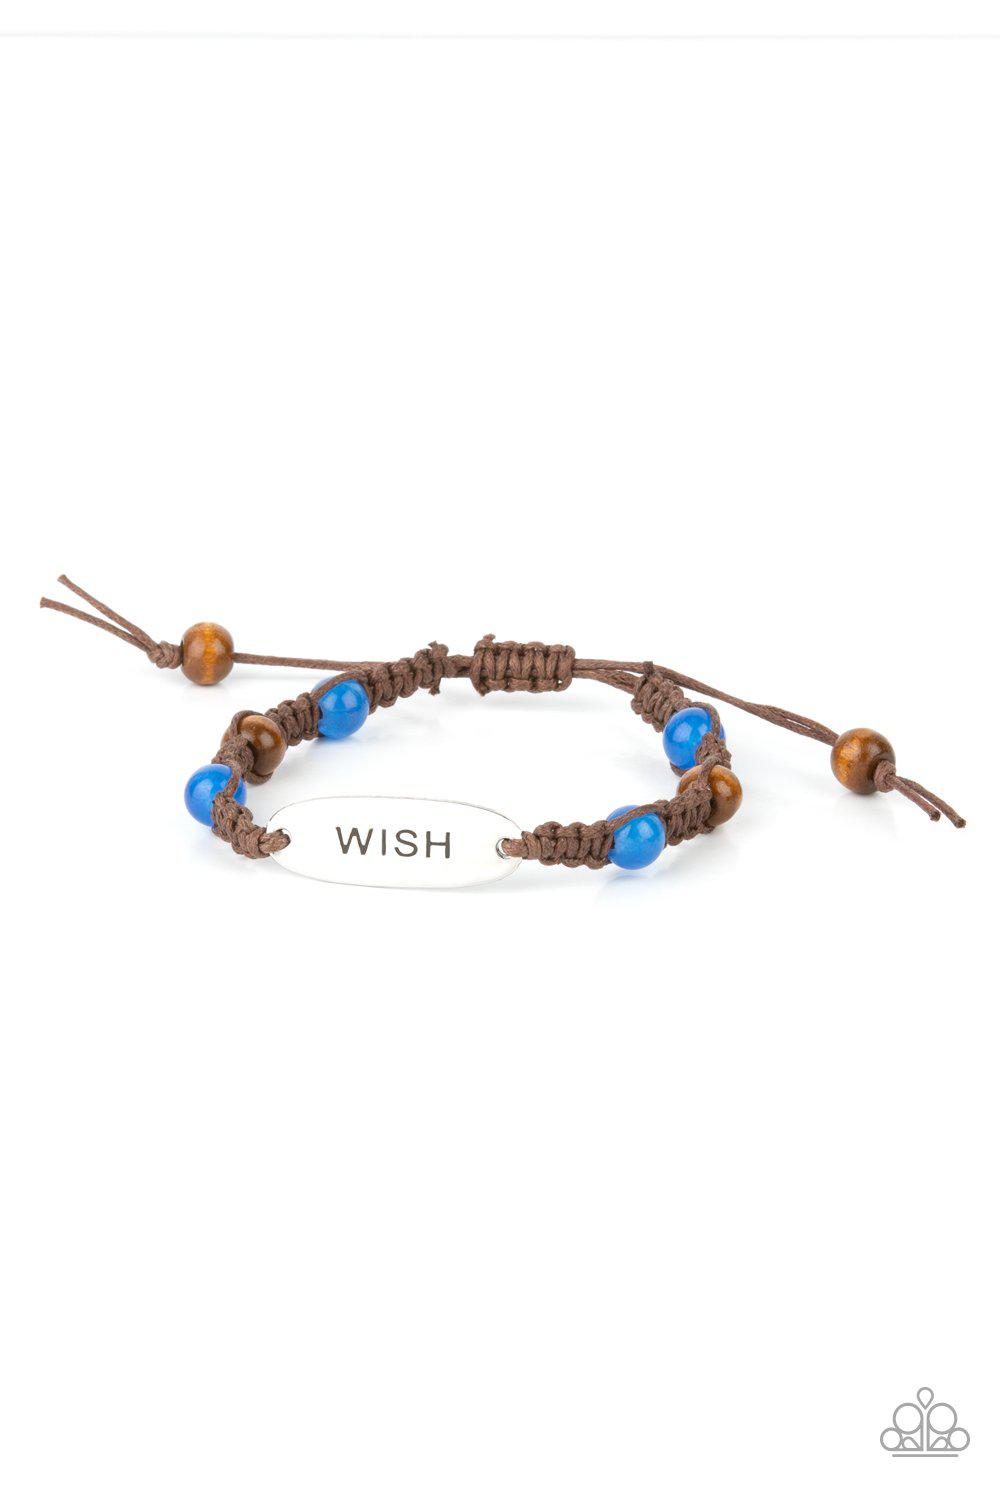 WISH This Way Blue Inspirational Urban Knot Bracelet - Paparazzi Accessories- lightbox - CarasShop.com - $5 Jewelry by Cara Jewels